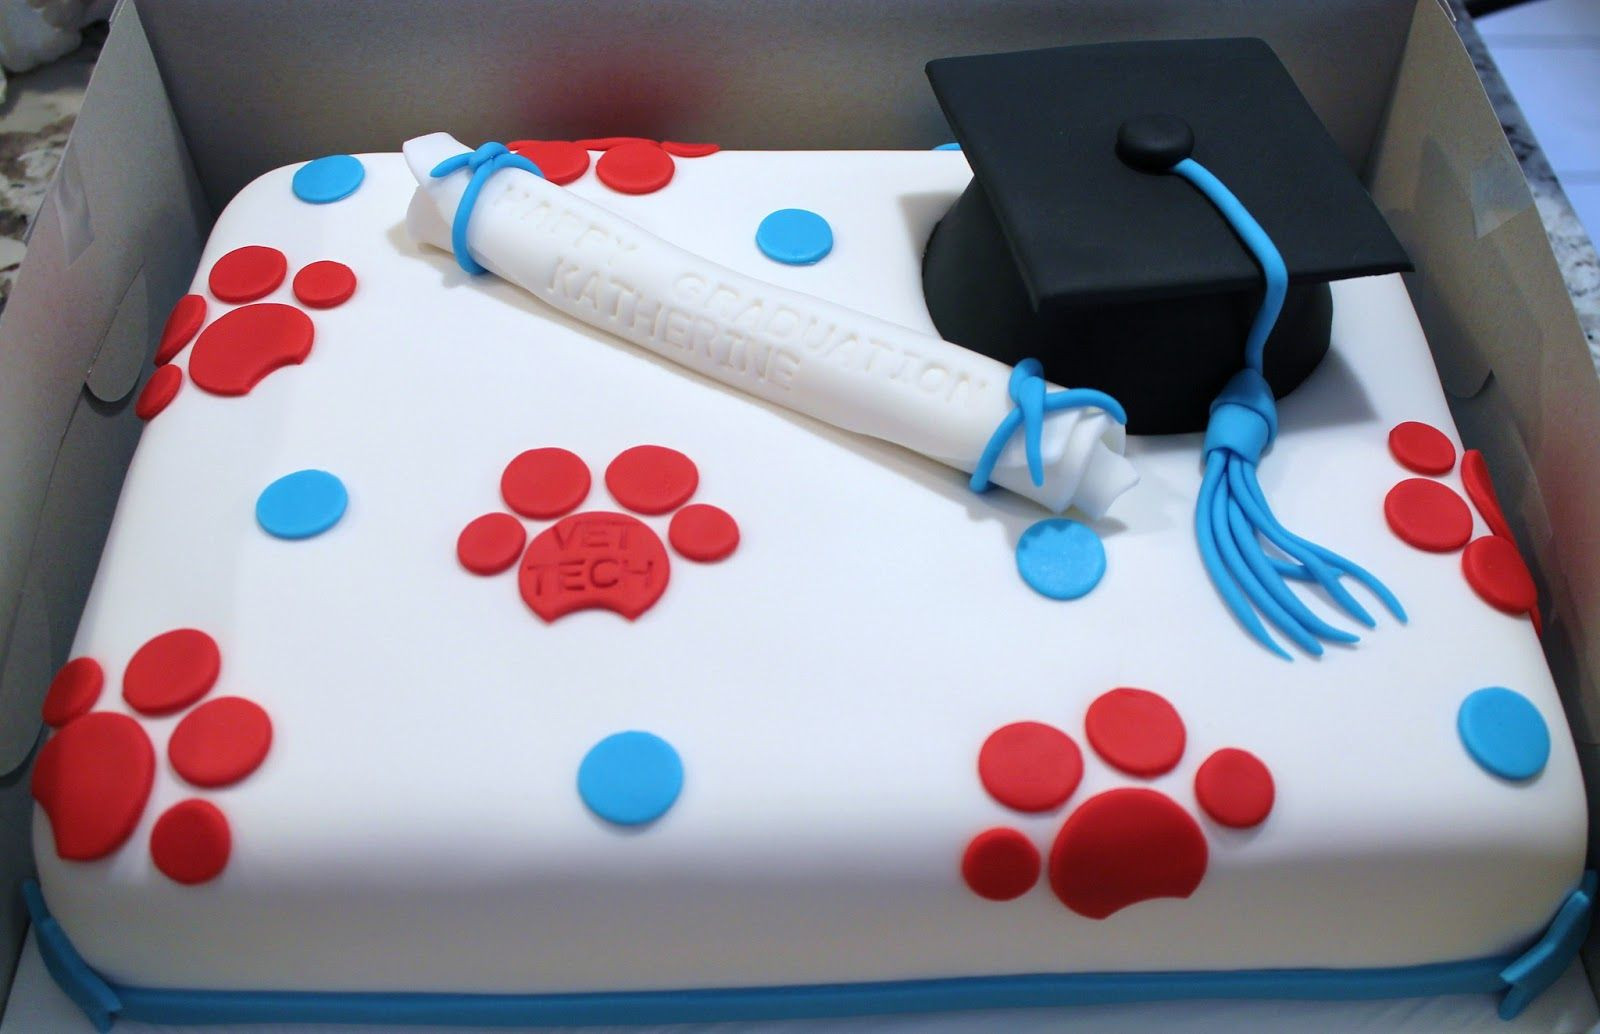 Veterinarian Graduation Party Ideas
 Vet tech graduation cake